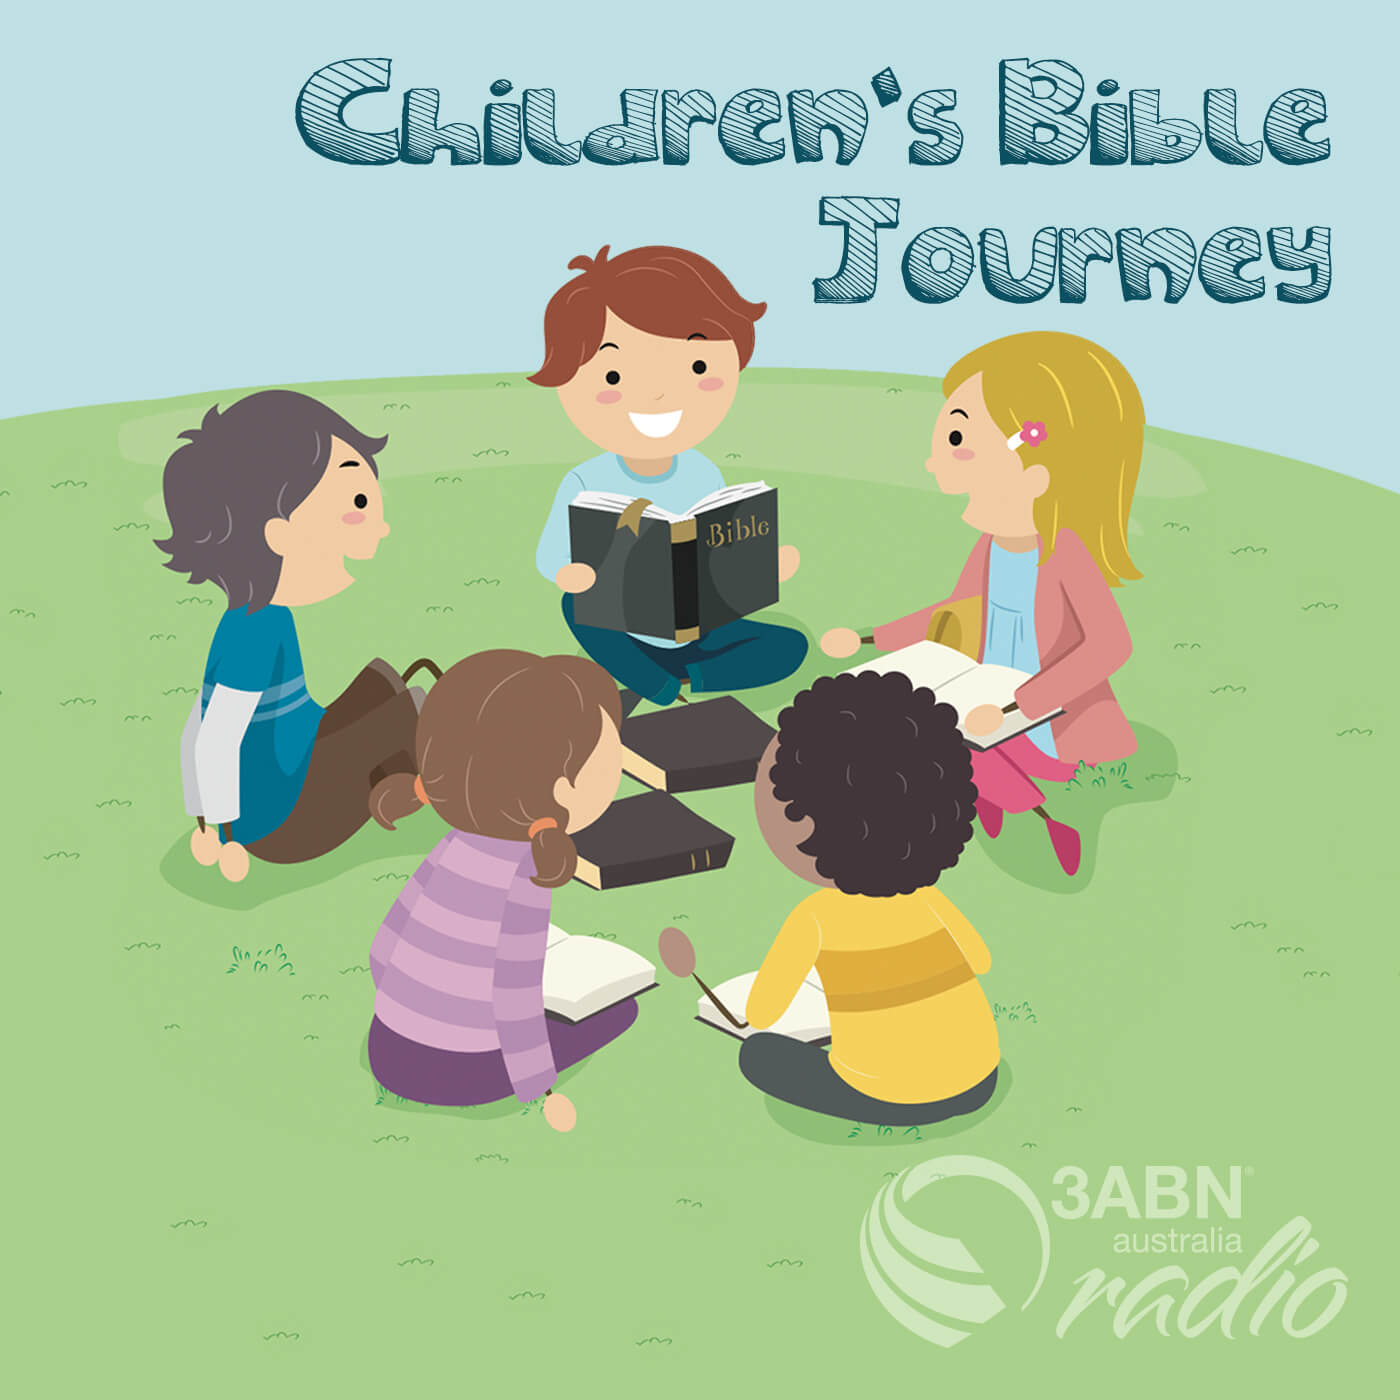 Children's Bible Journey - 2114